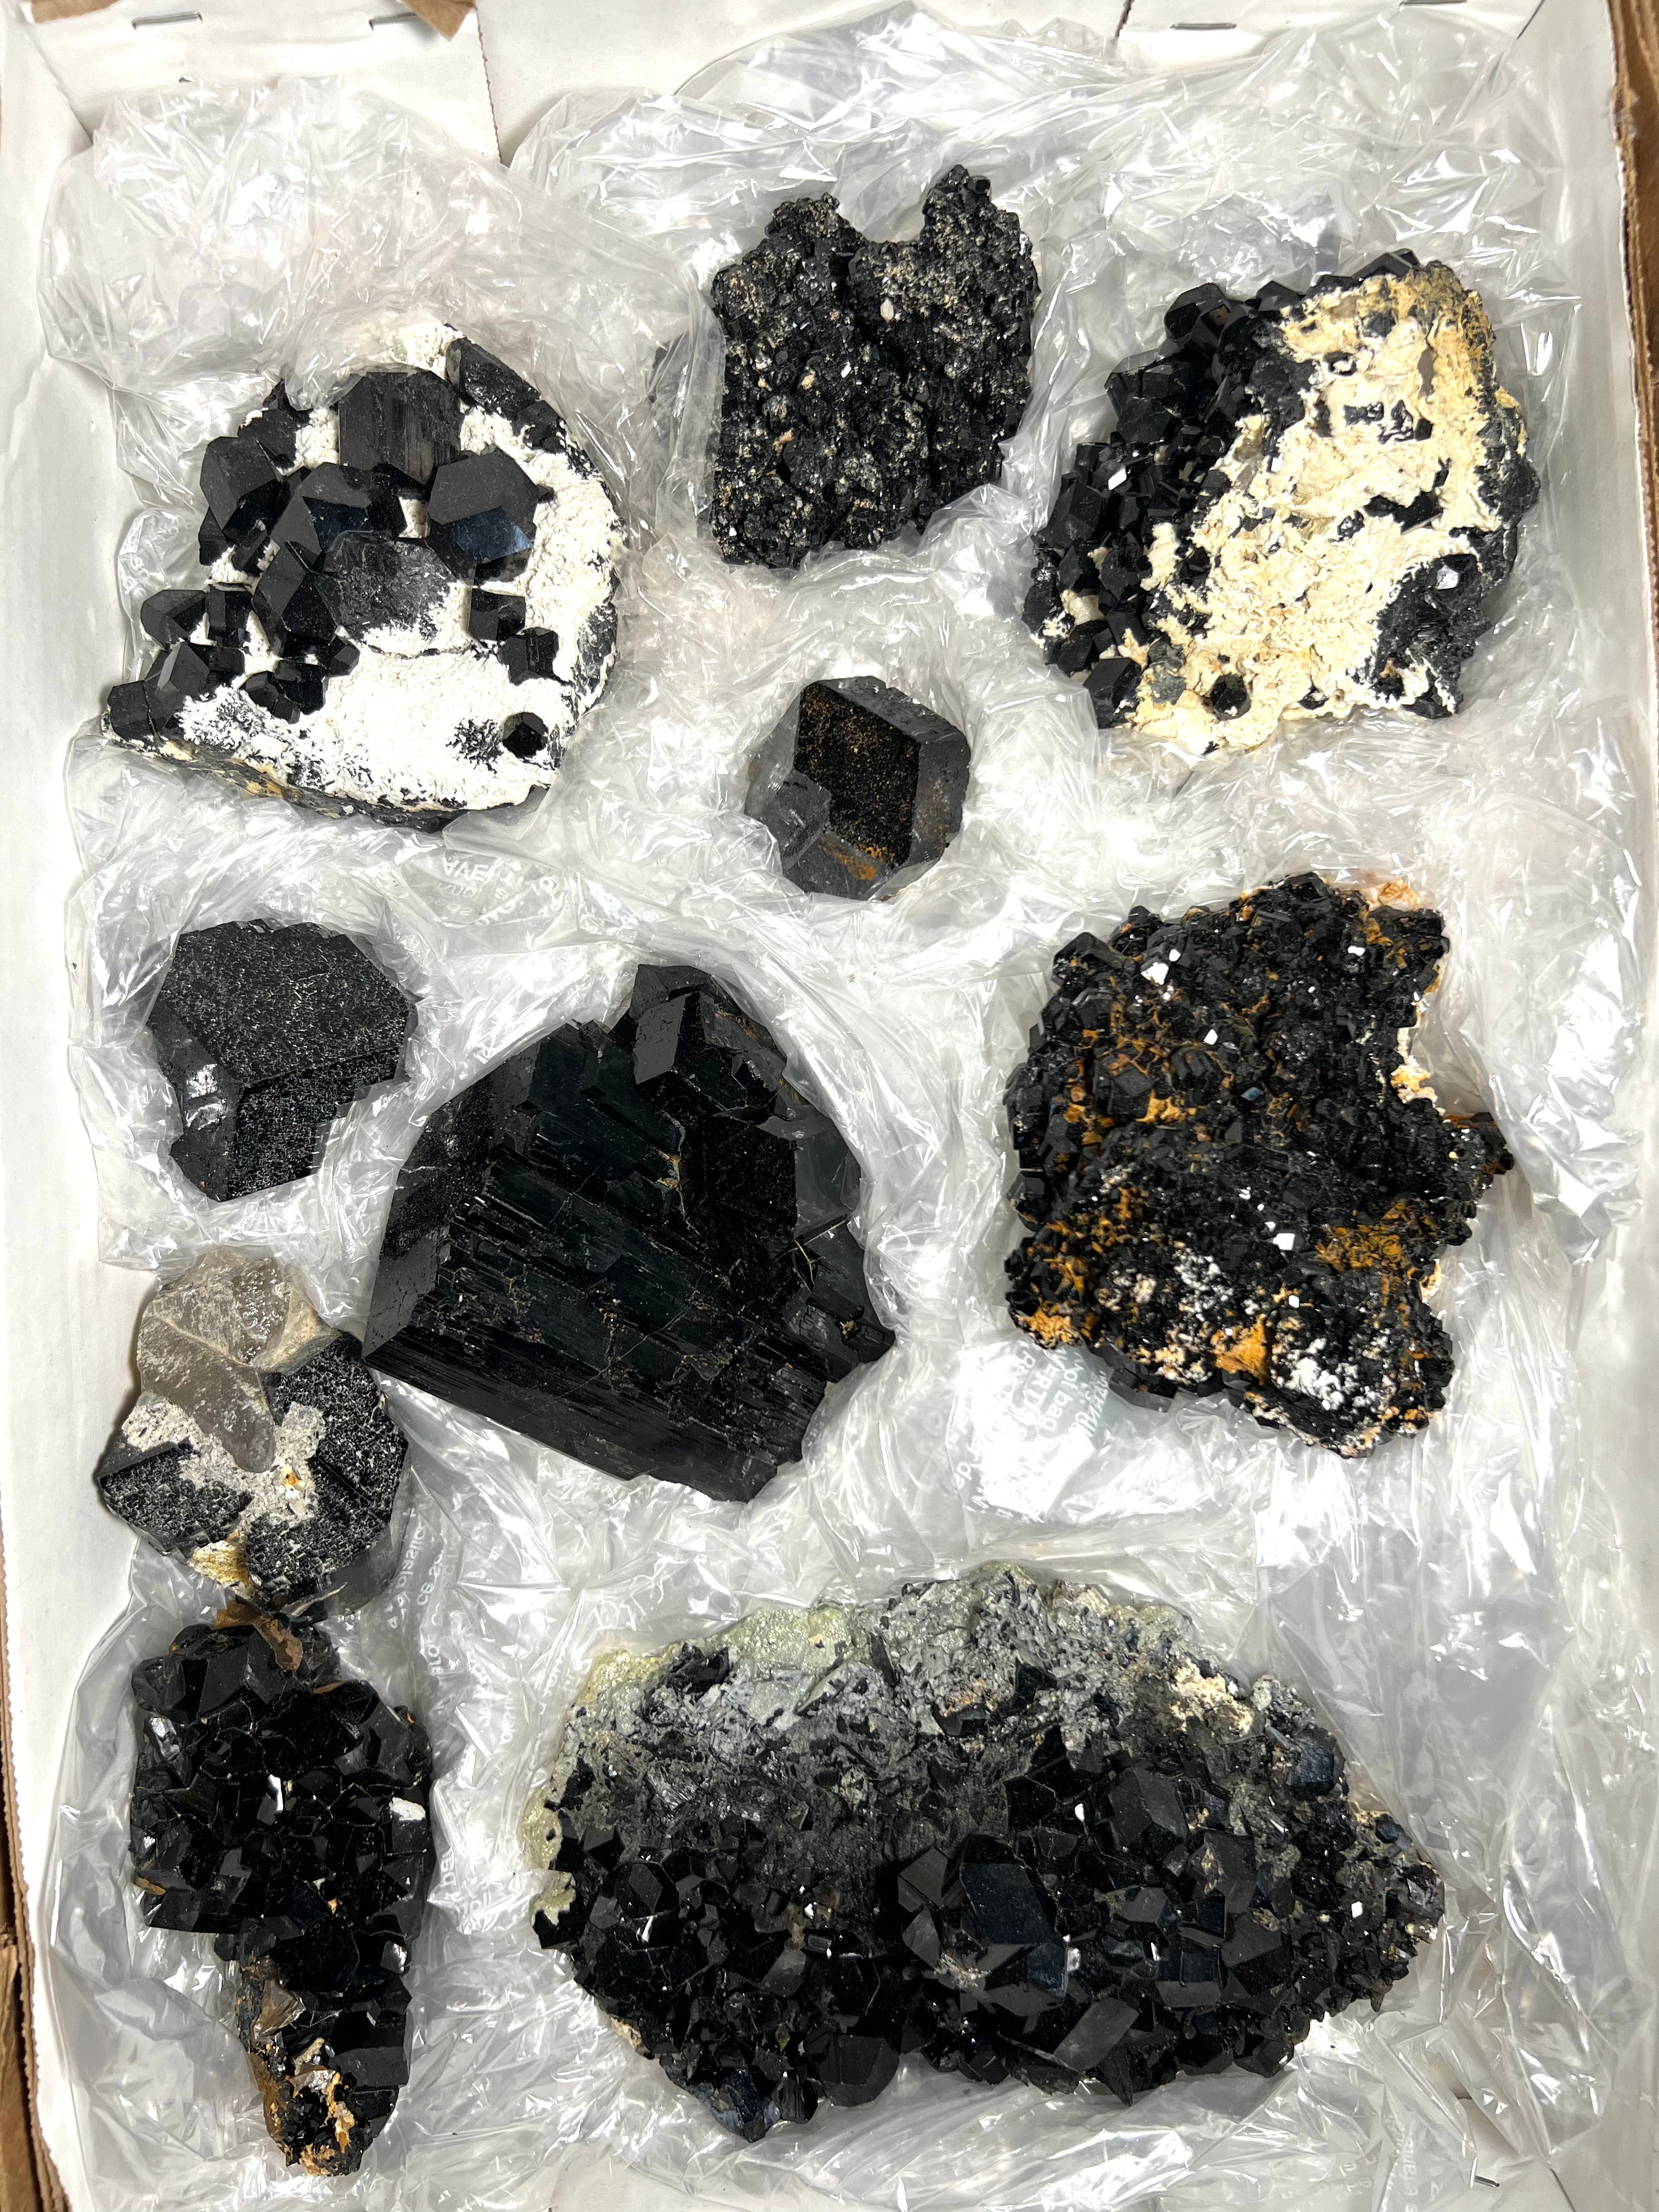 Lot of 10 Black Melanite Andradite Garnet Crystals From Tanzania